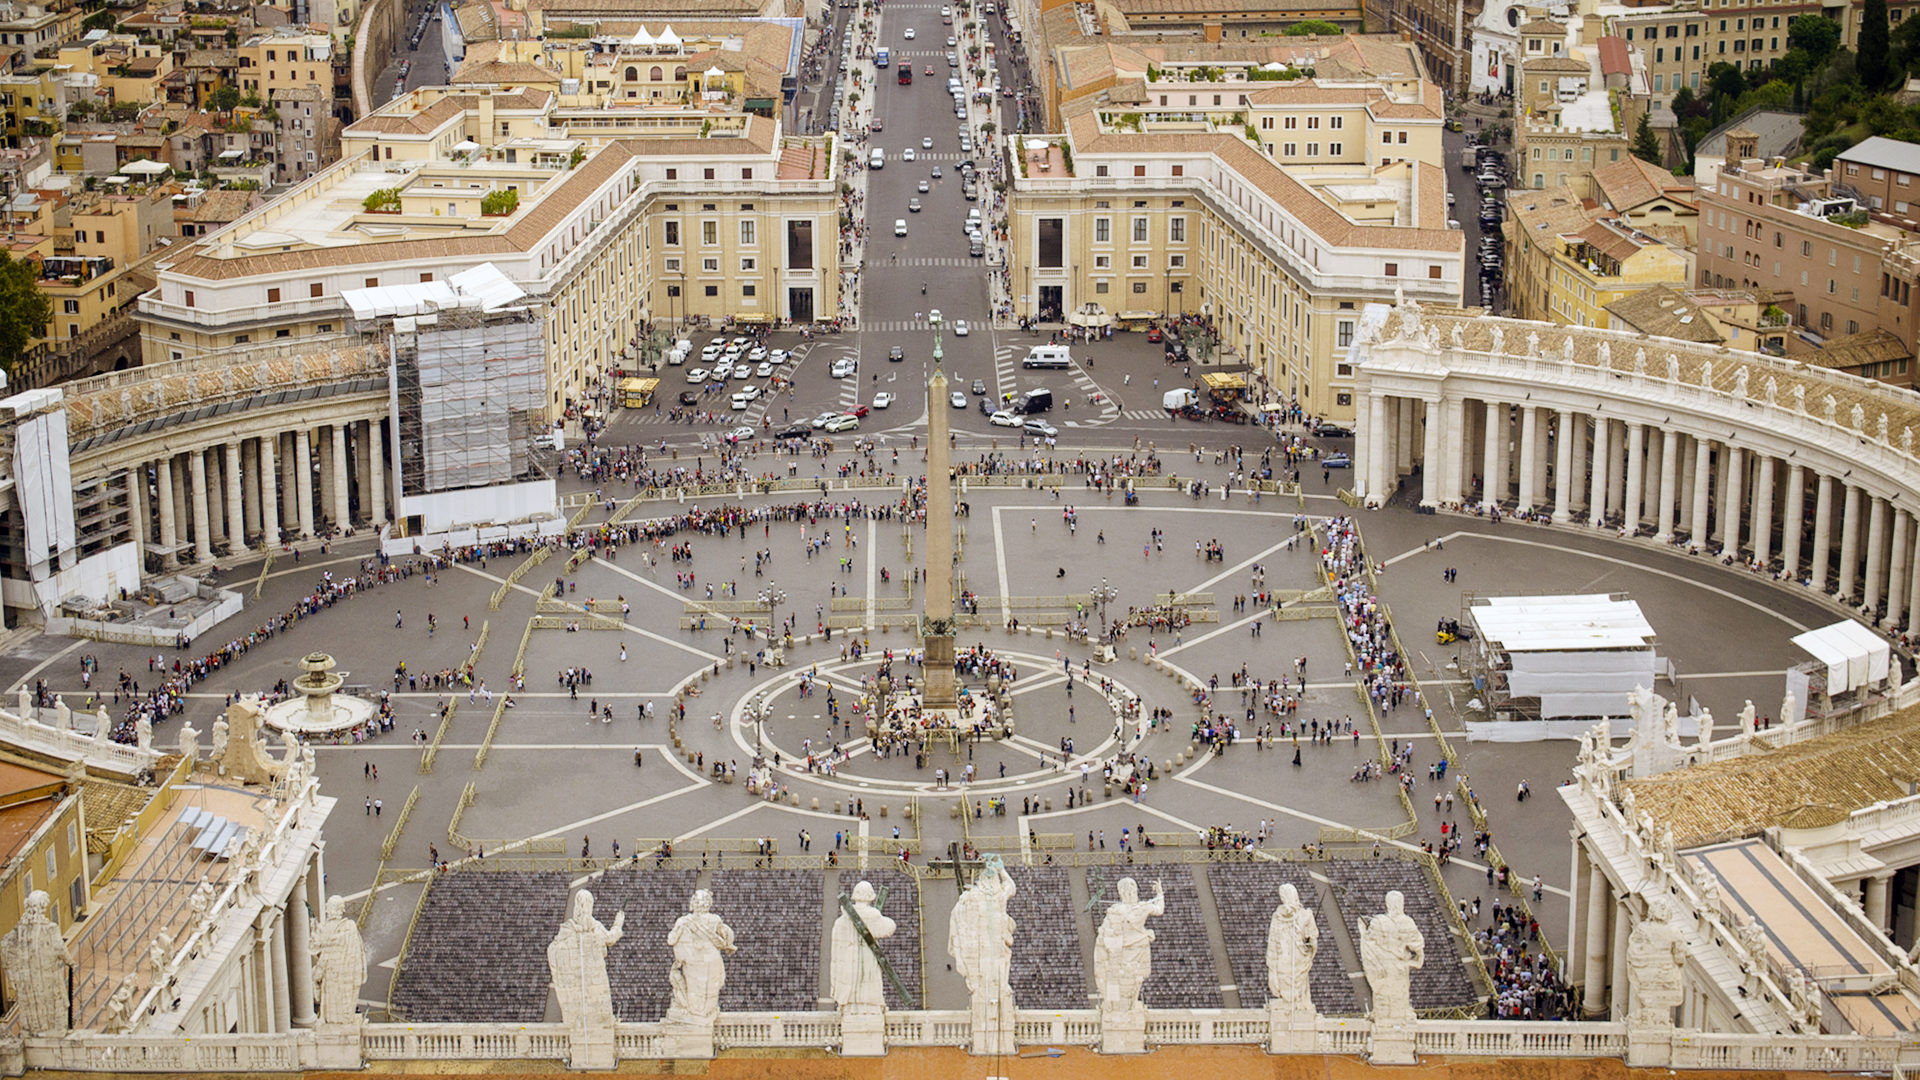 Ватикан страна или город. Площадь Святого Петра в Риме. Площадь Святого Петра Ватикан. Рим и Ватикан.